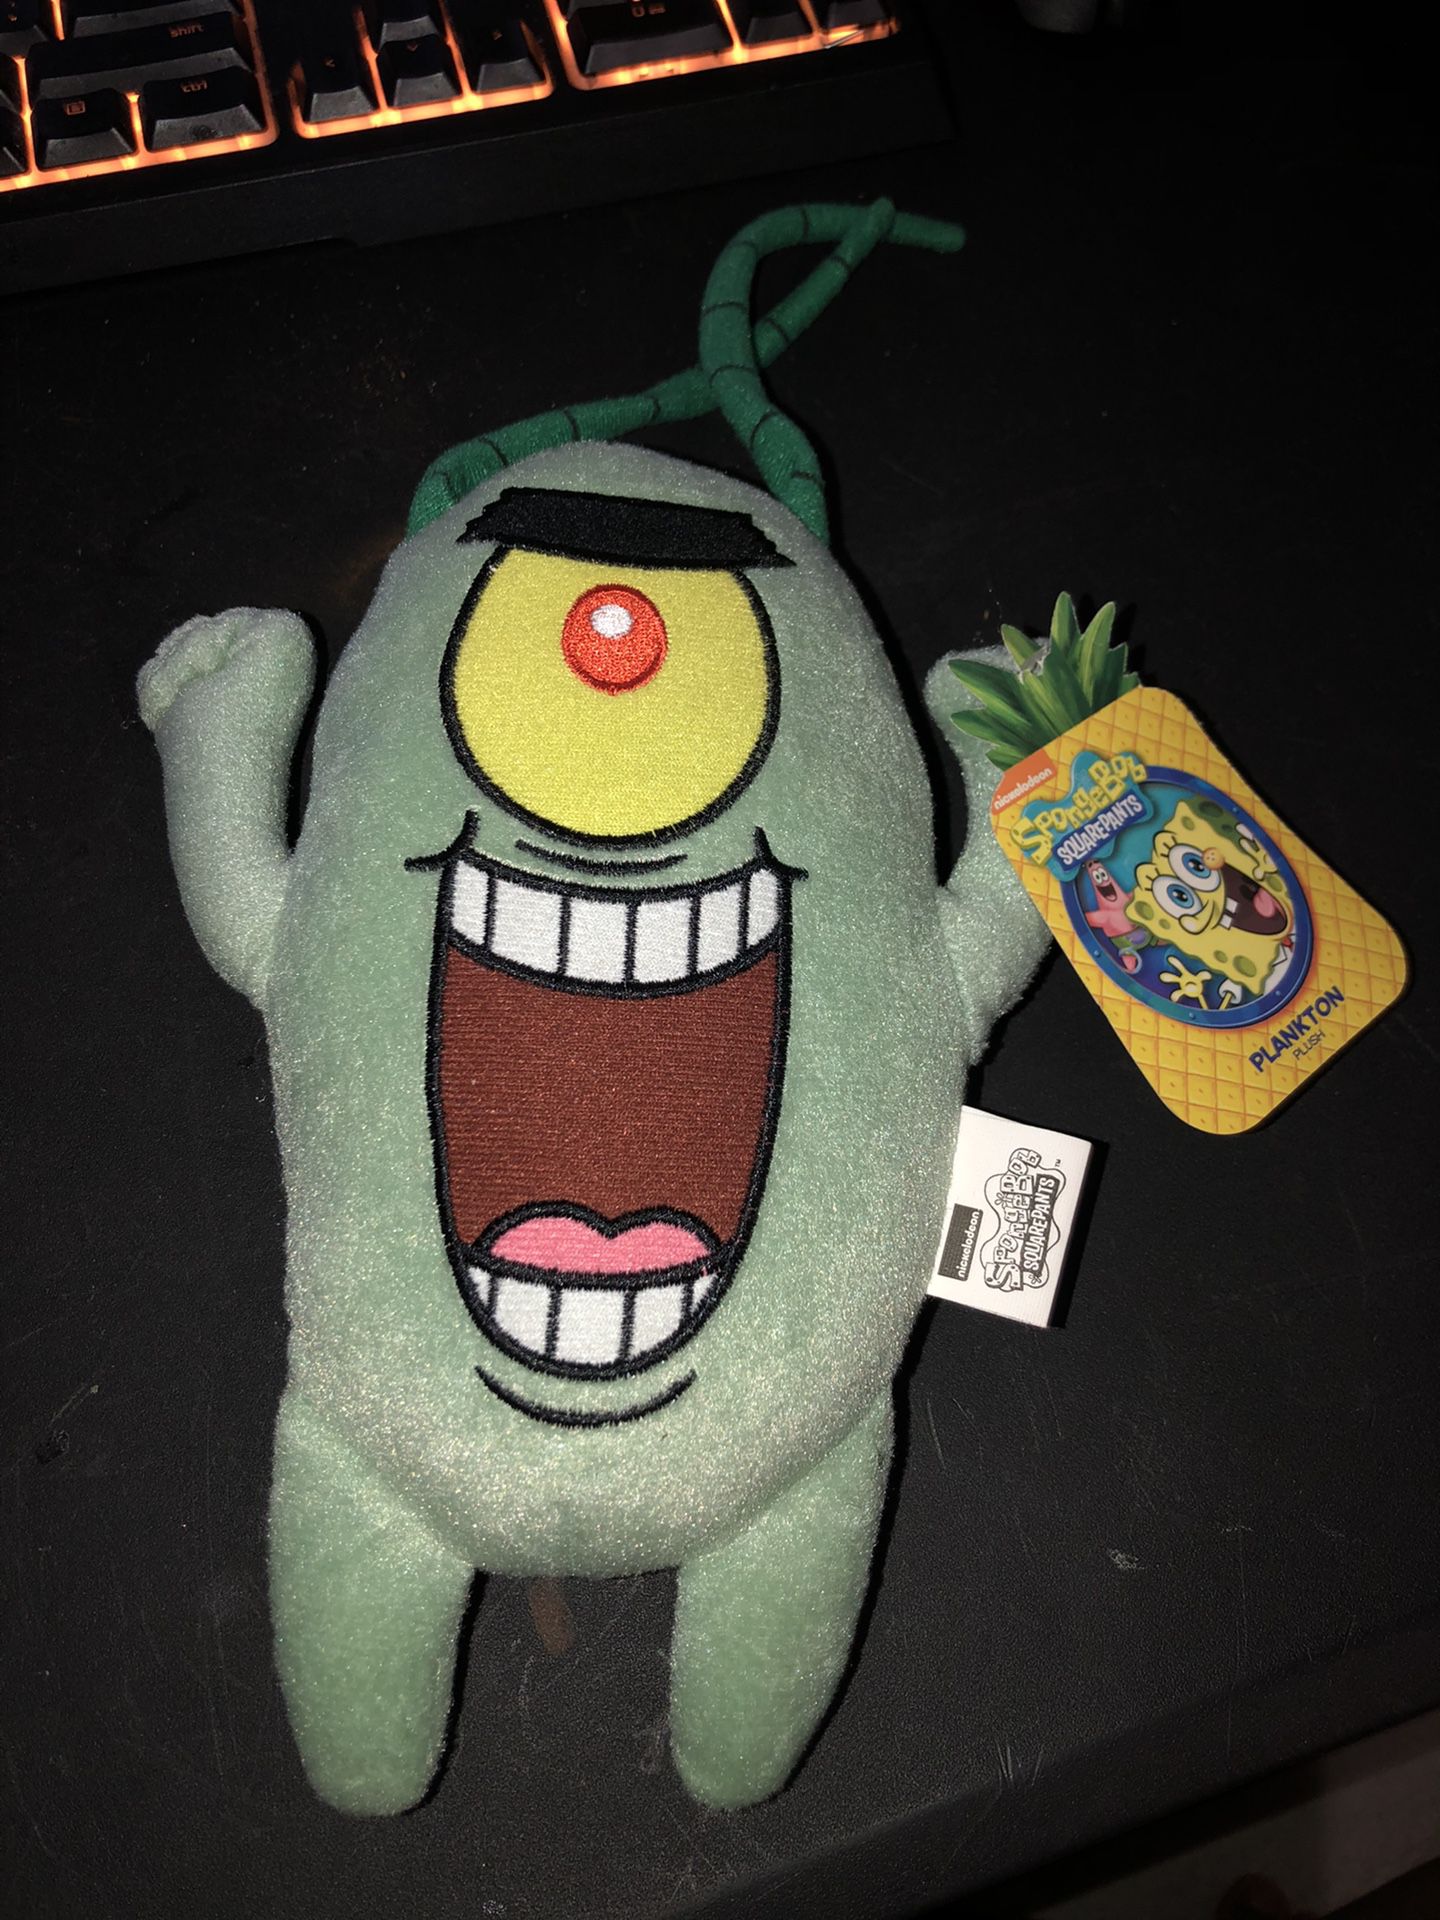 Spongebob Squarepants Plankton Plush Toy for Sale in Gilbert, AZ - OfferUp